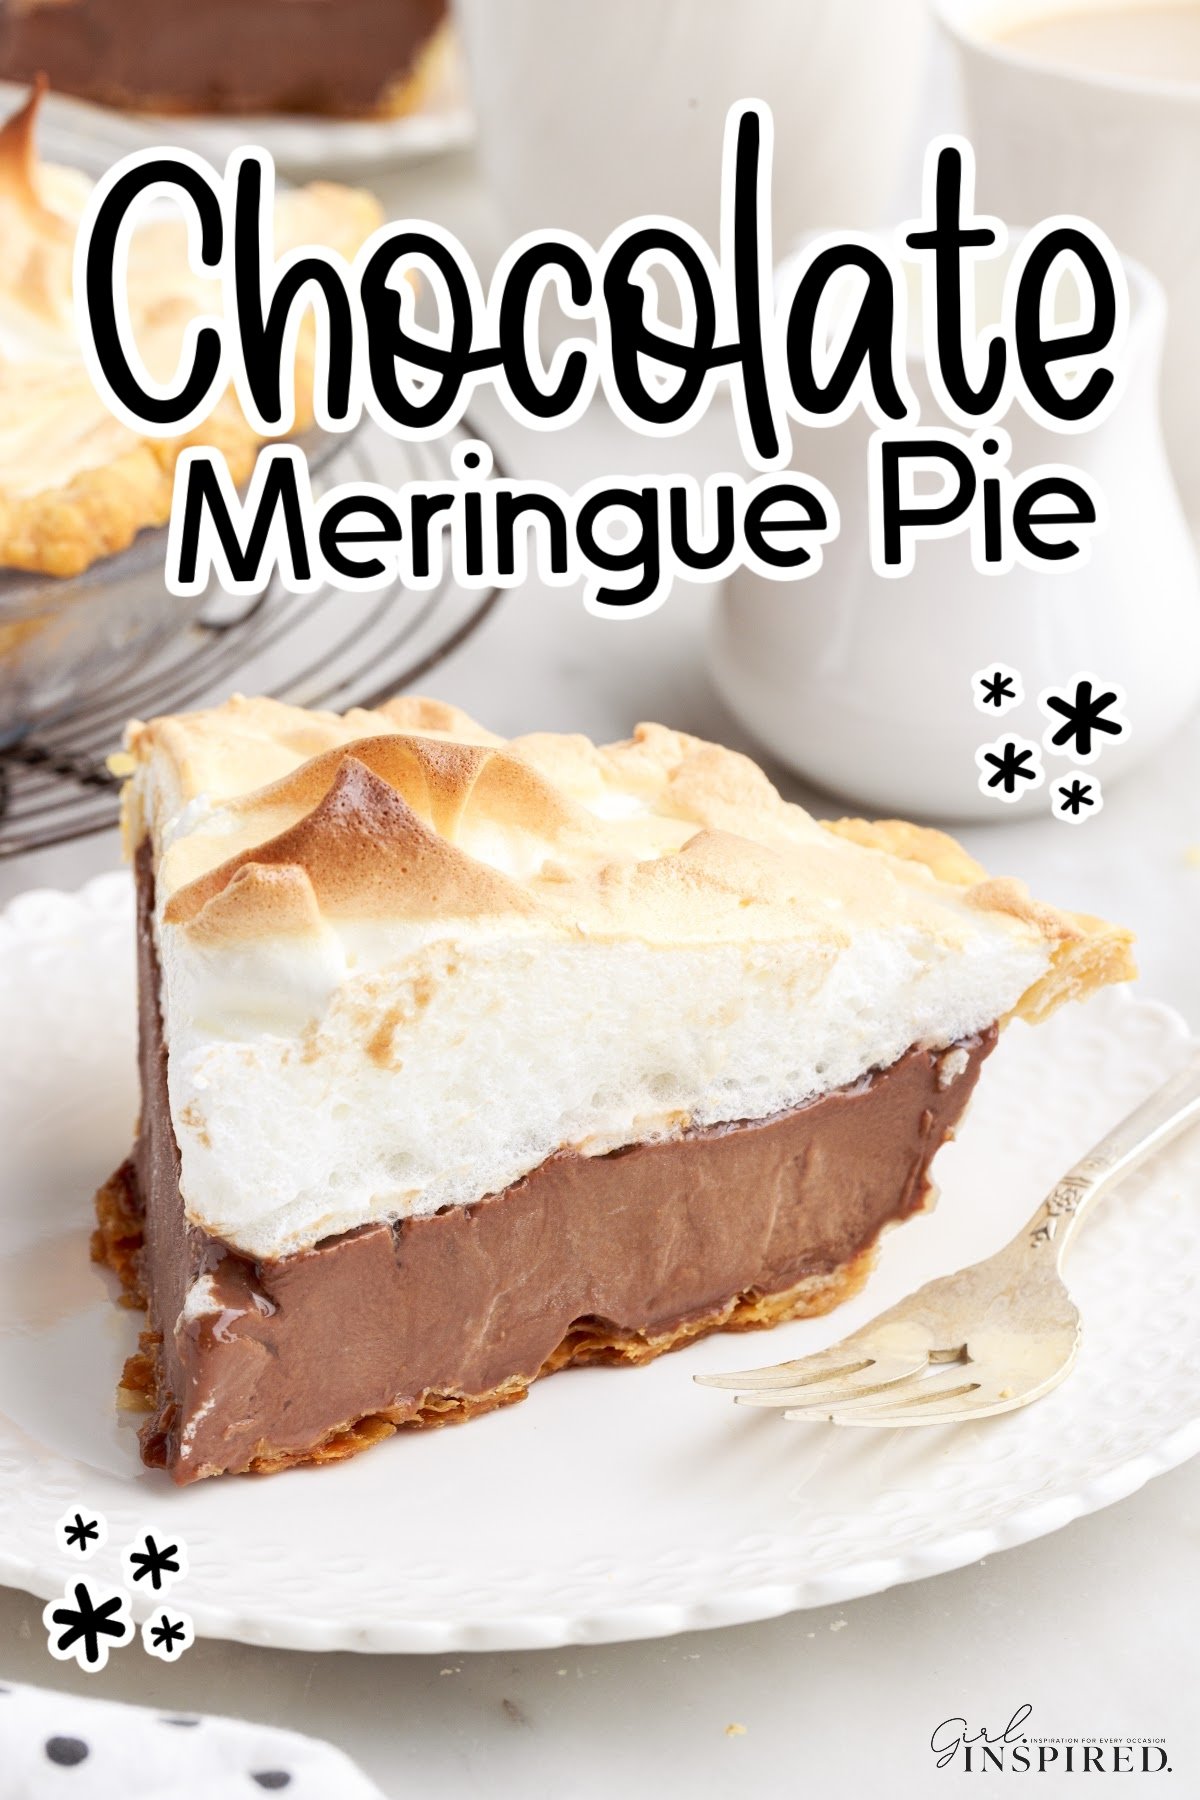 Slice of Chocolate Meringue Pie with text overlay.